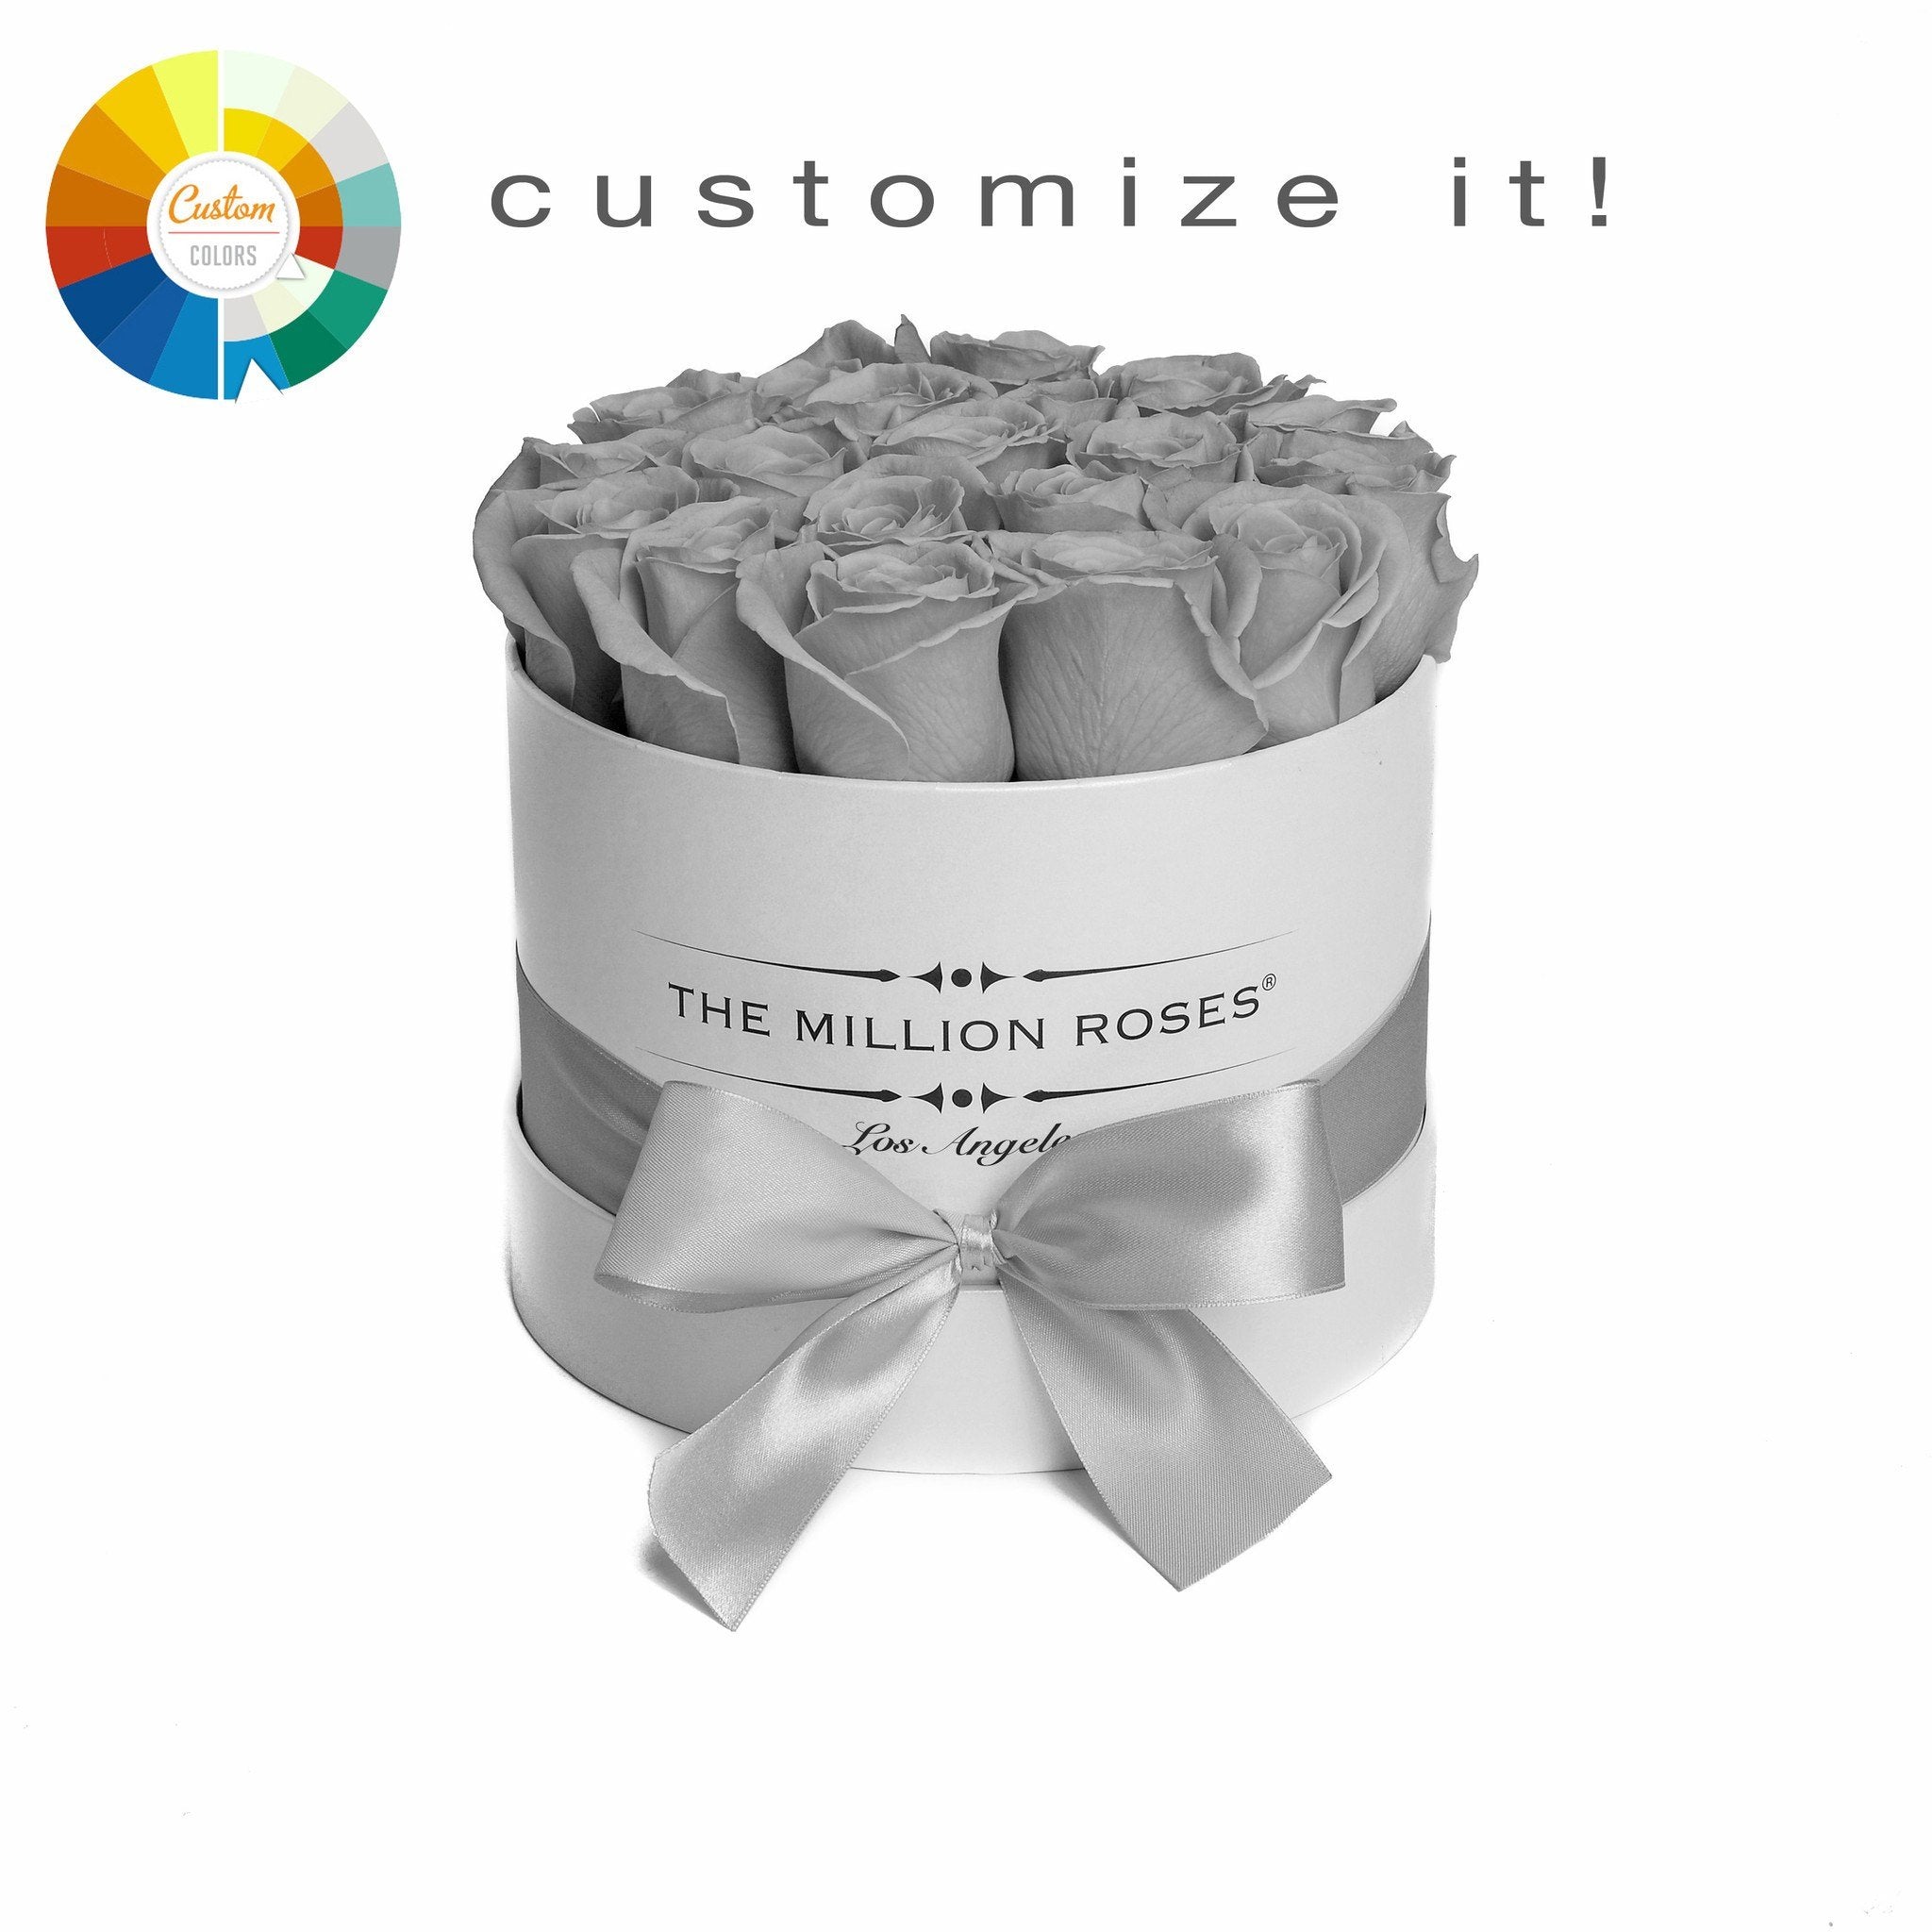 classic round box - customize it! customized - the million roses